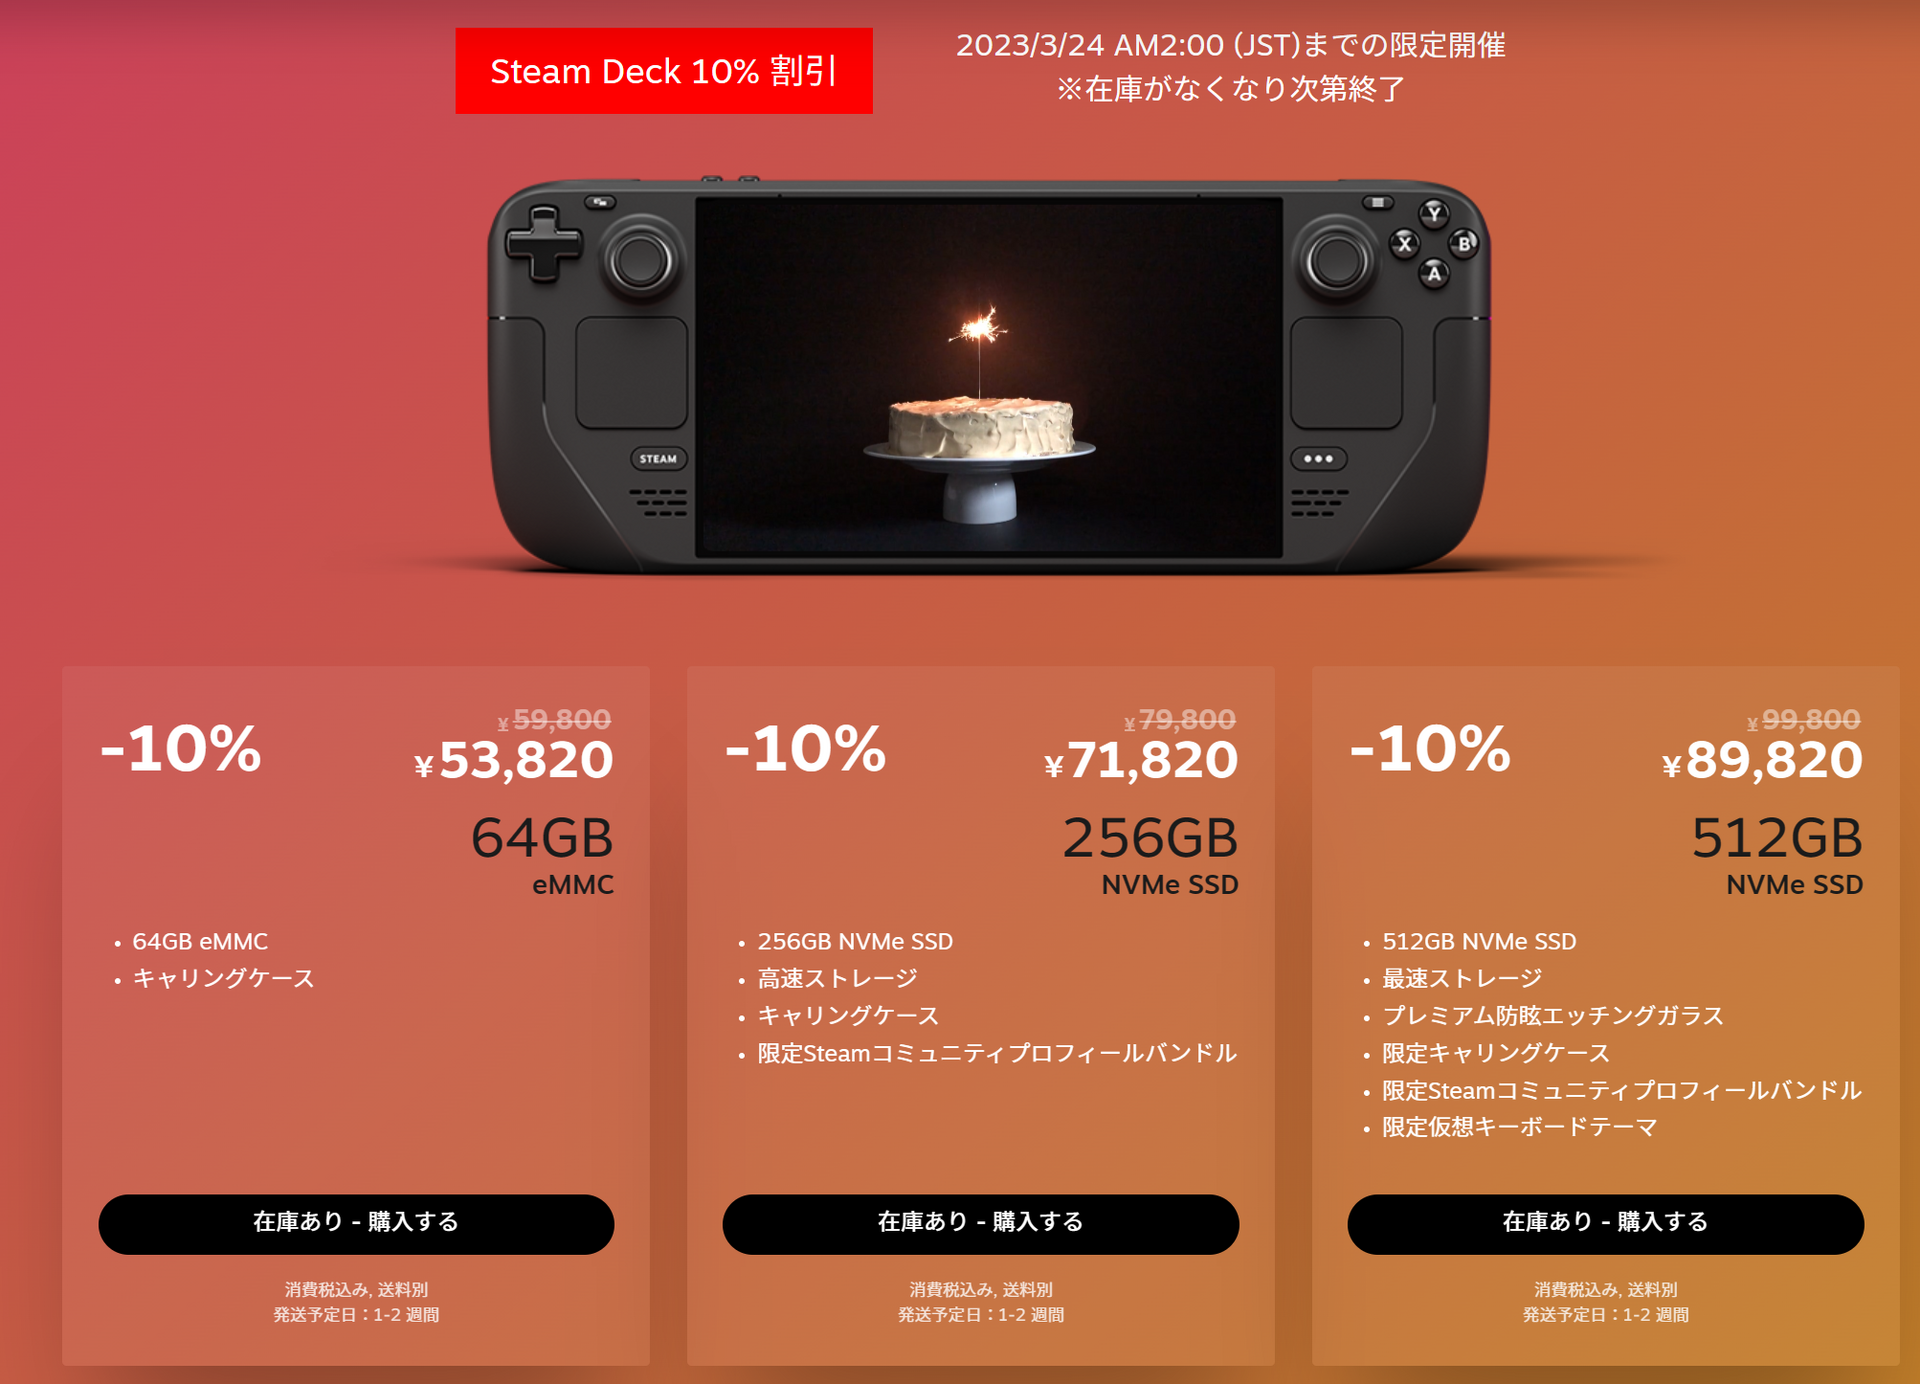 Steam Deck 512GB 使用時間10時間未満 即決落札は2万円程度の付属品 